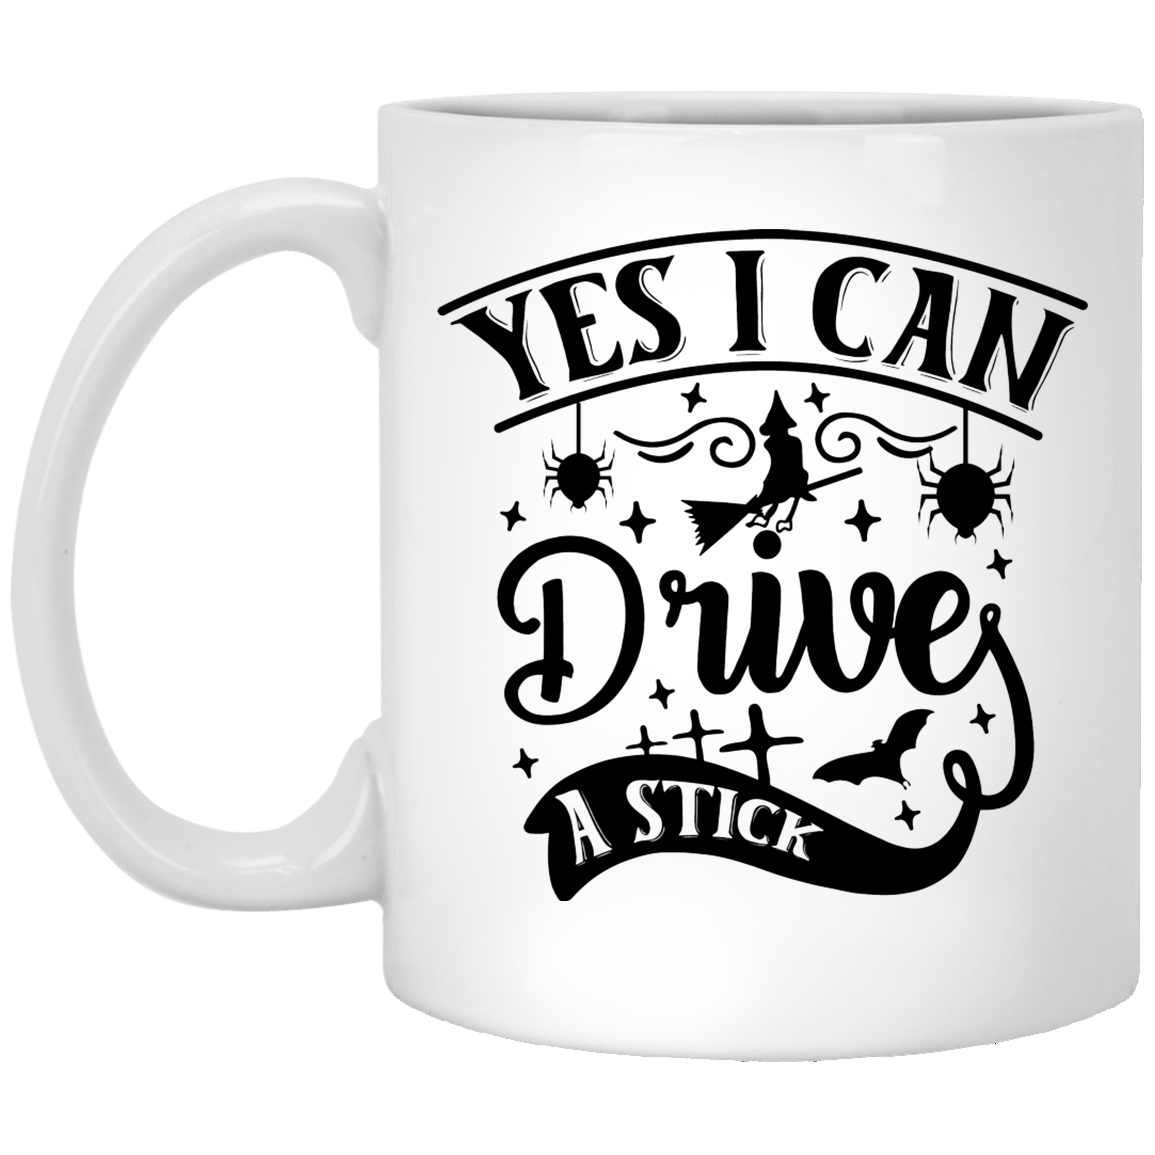 Yes I Can Drive A Stick - Mugs